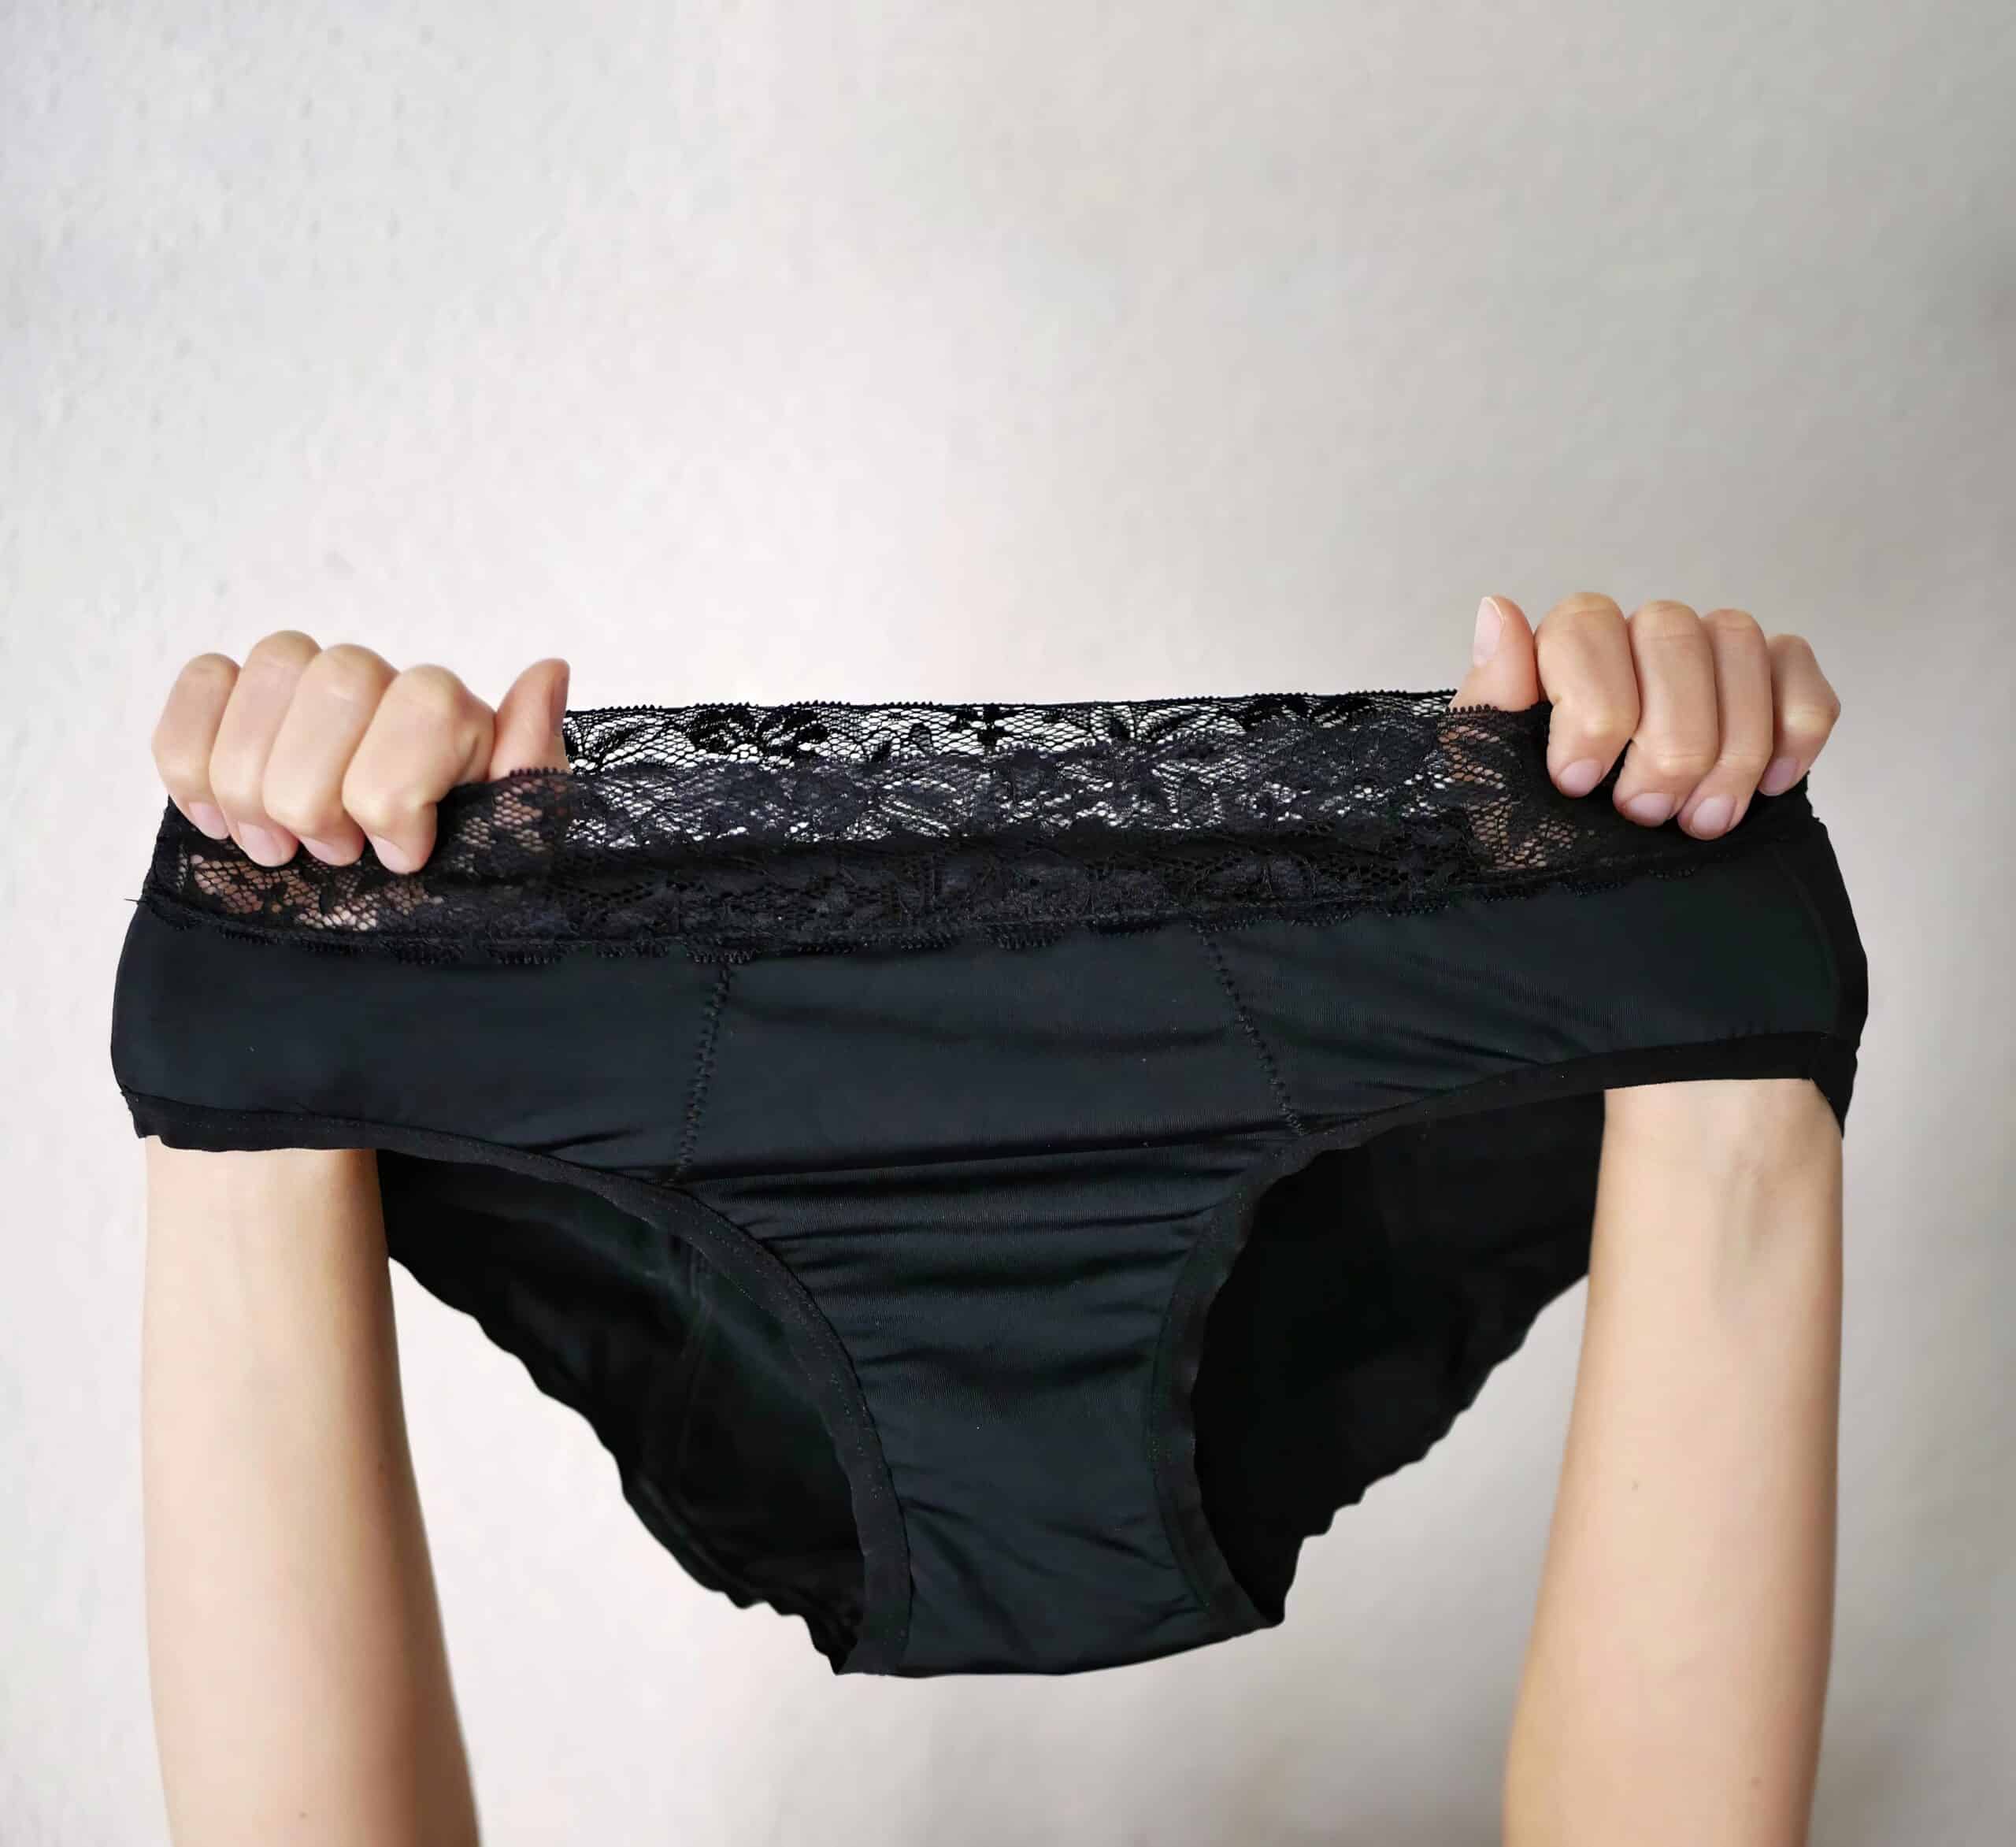 Cotton vs Nylon Underwear: Which is Better for Sensitive Skin? 